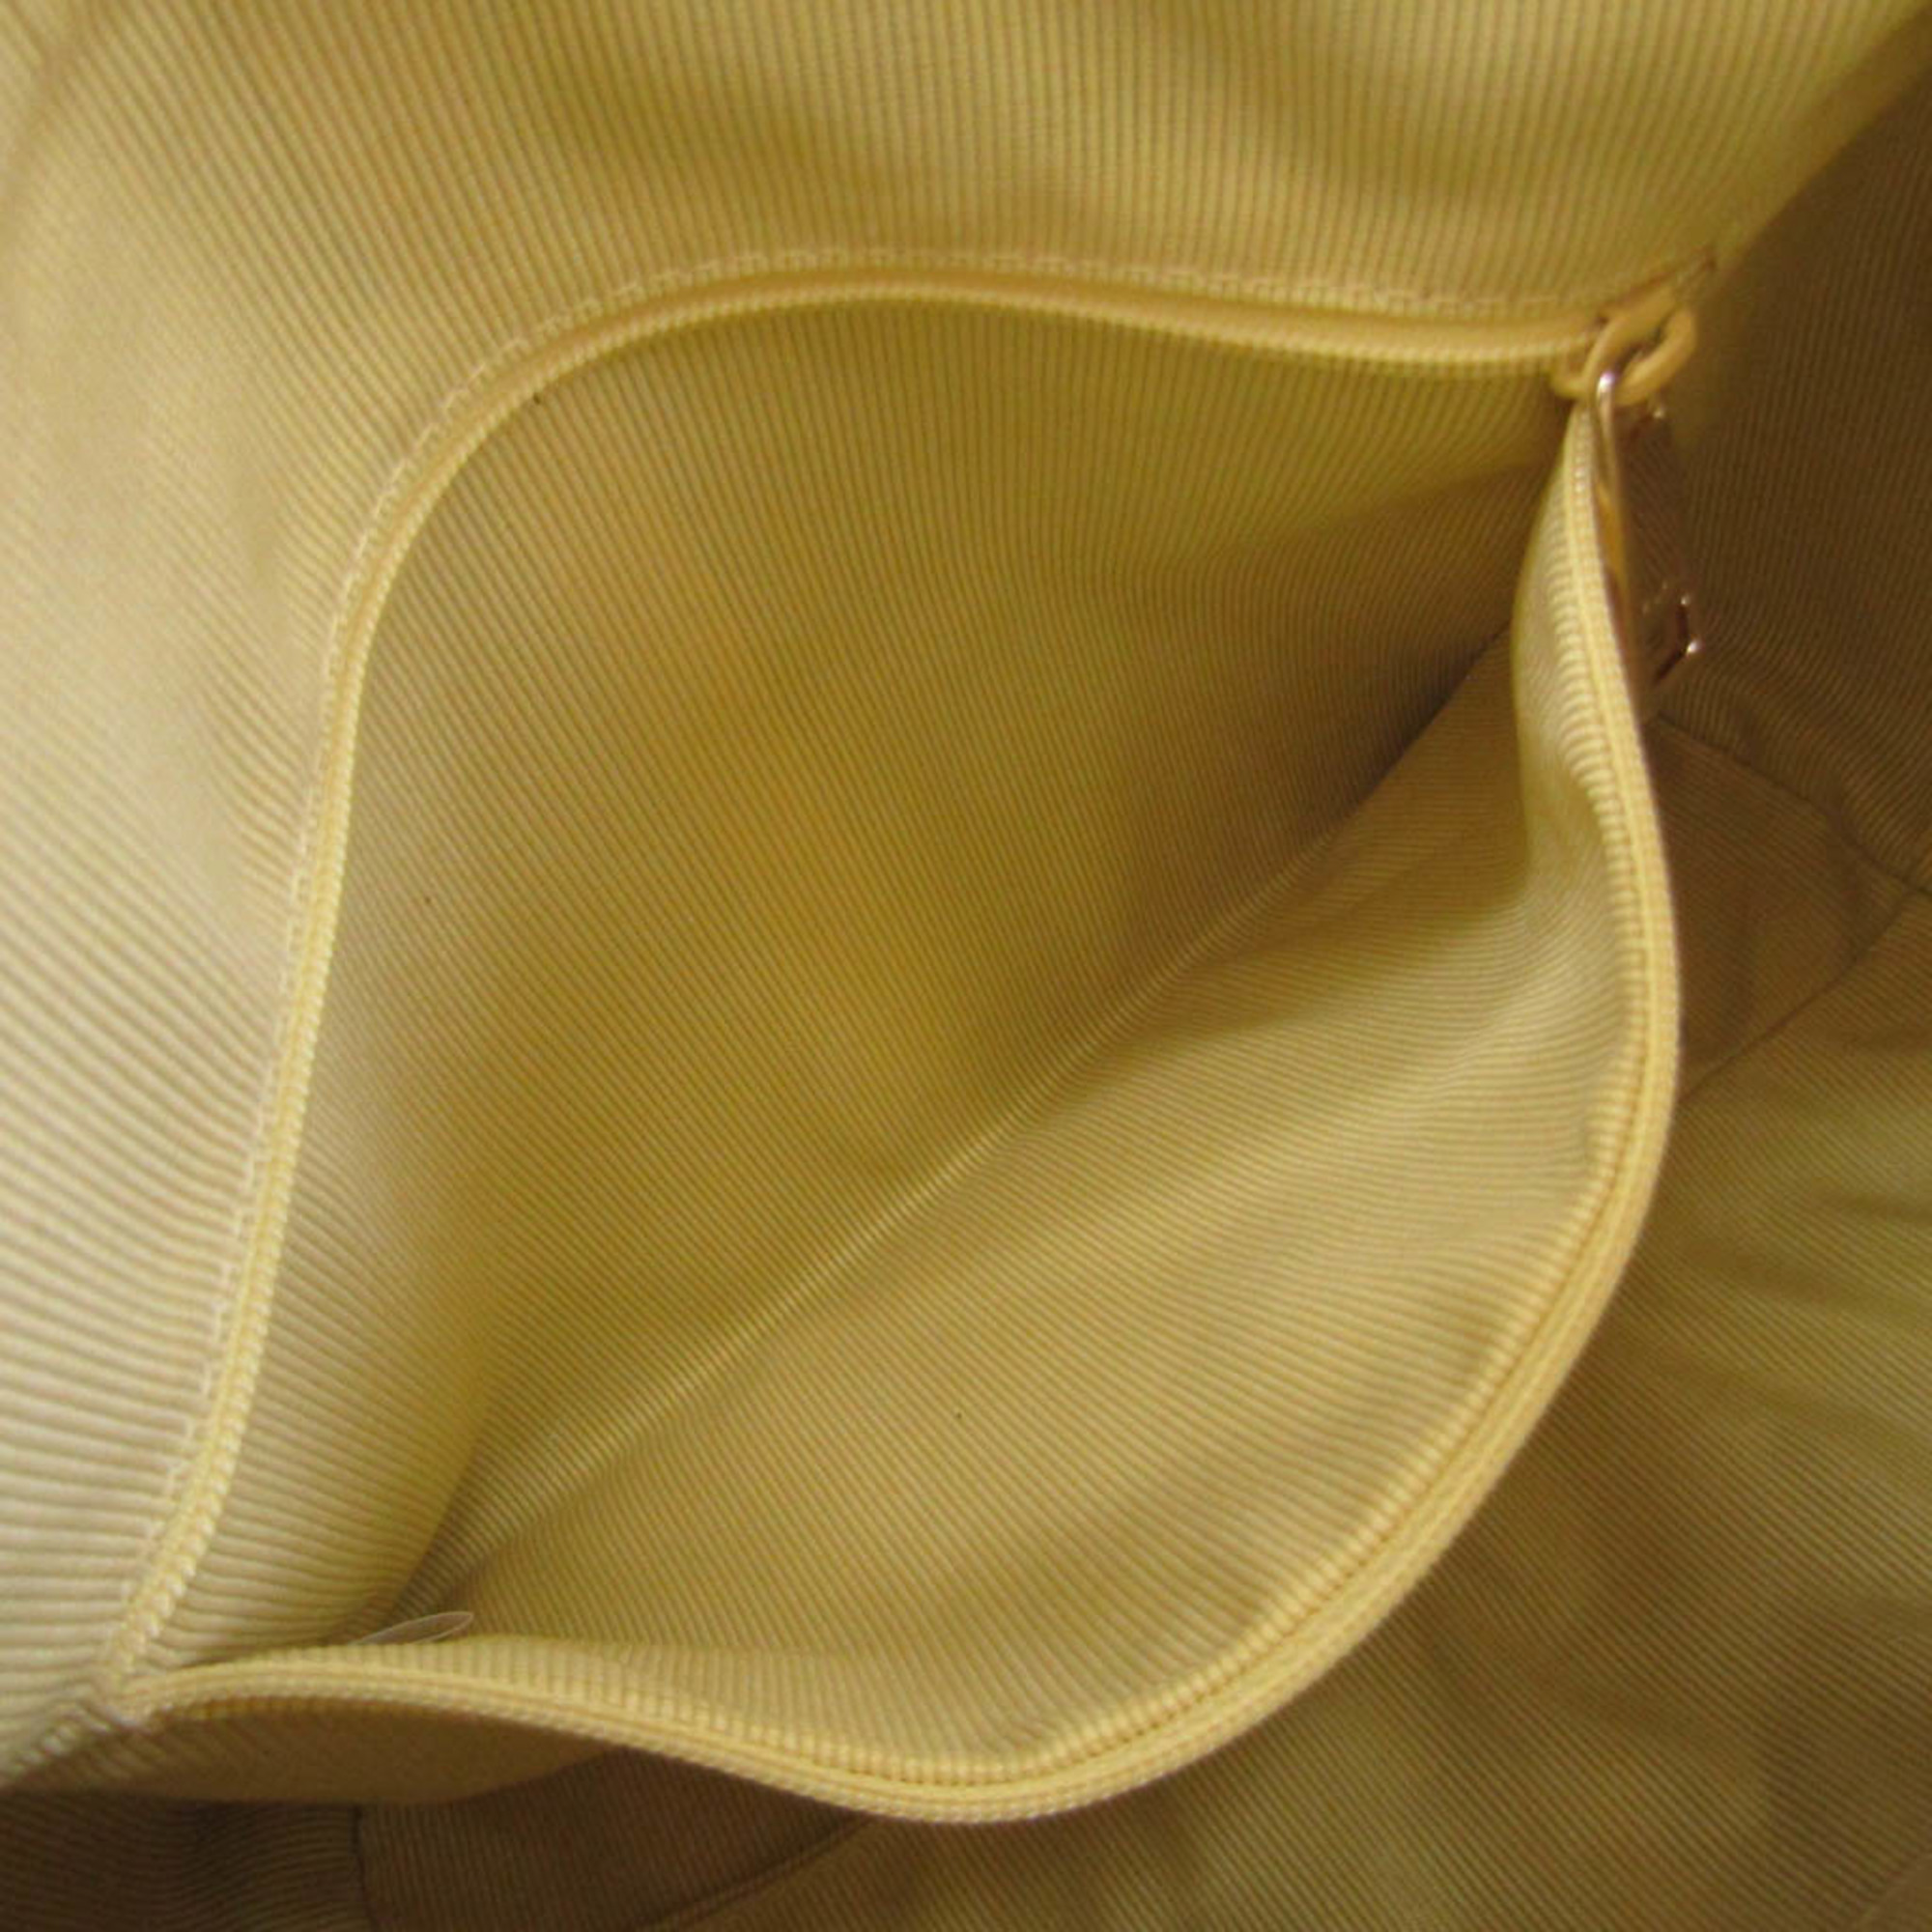 Furla GINGER S HOBO WB00514 BX0329 Women's Leather Handbag Yellow